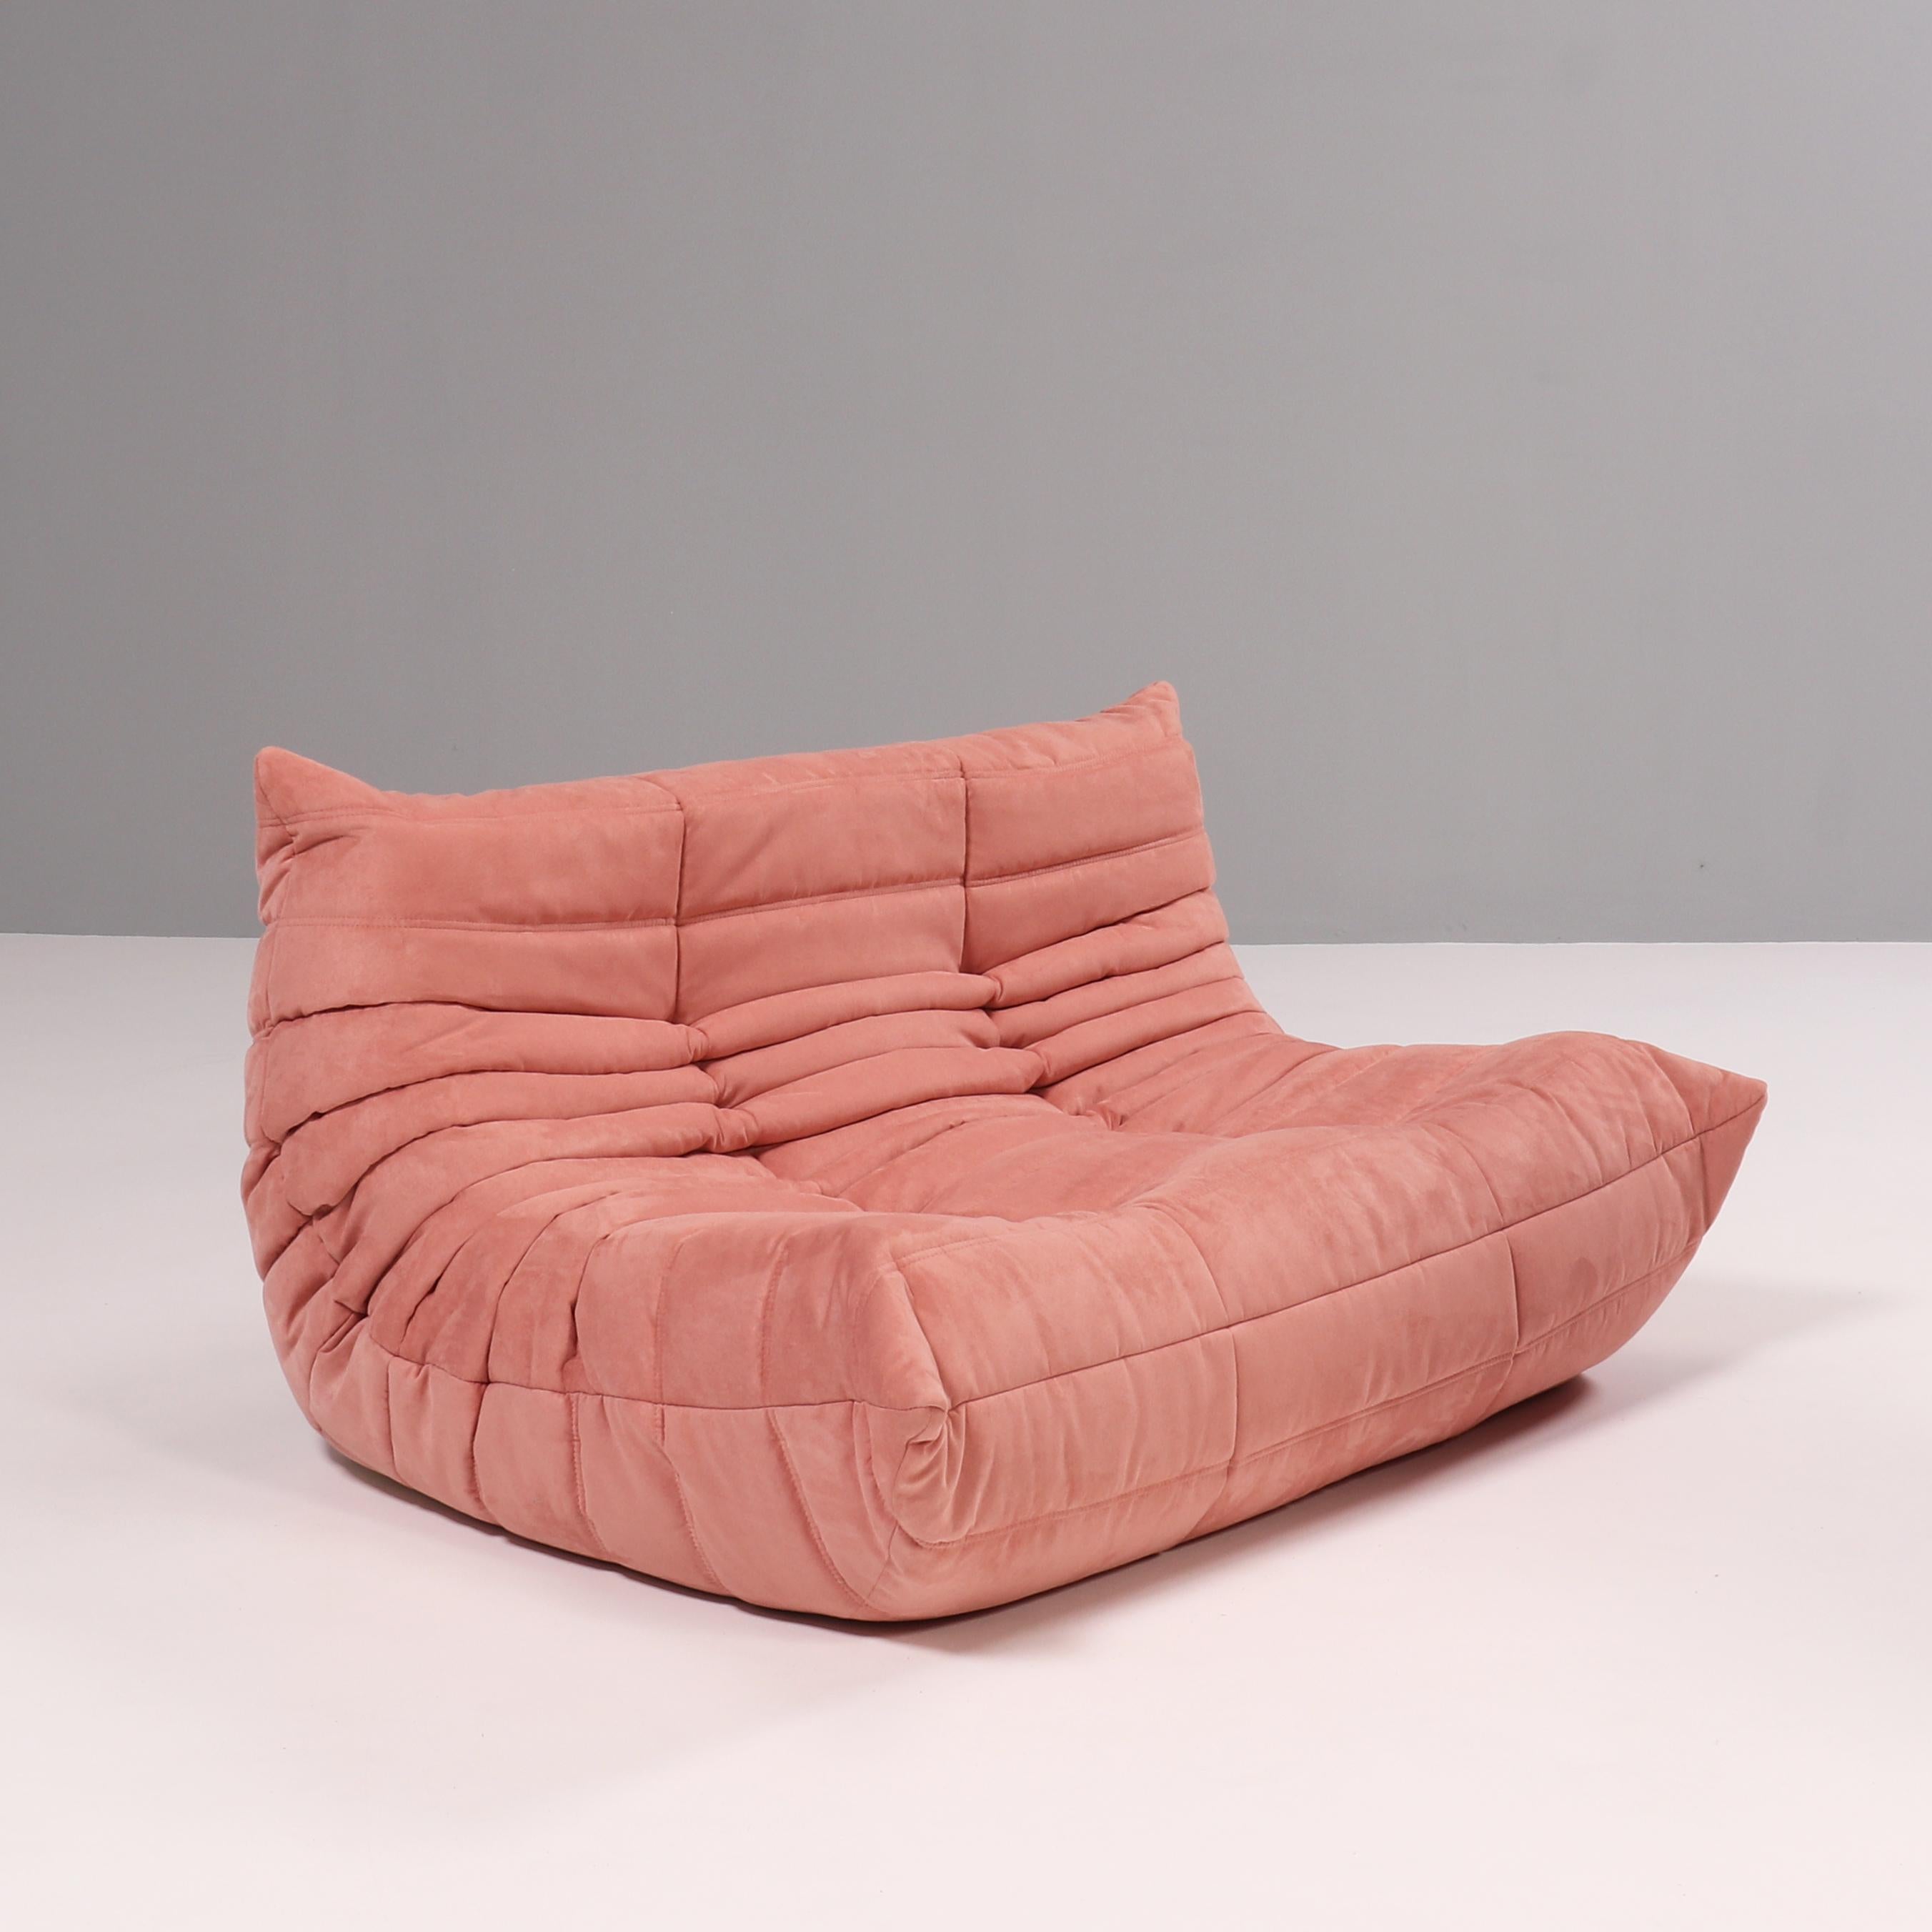 sofa set with footstool